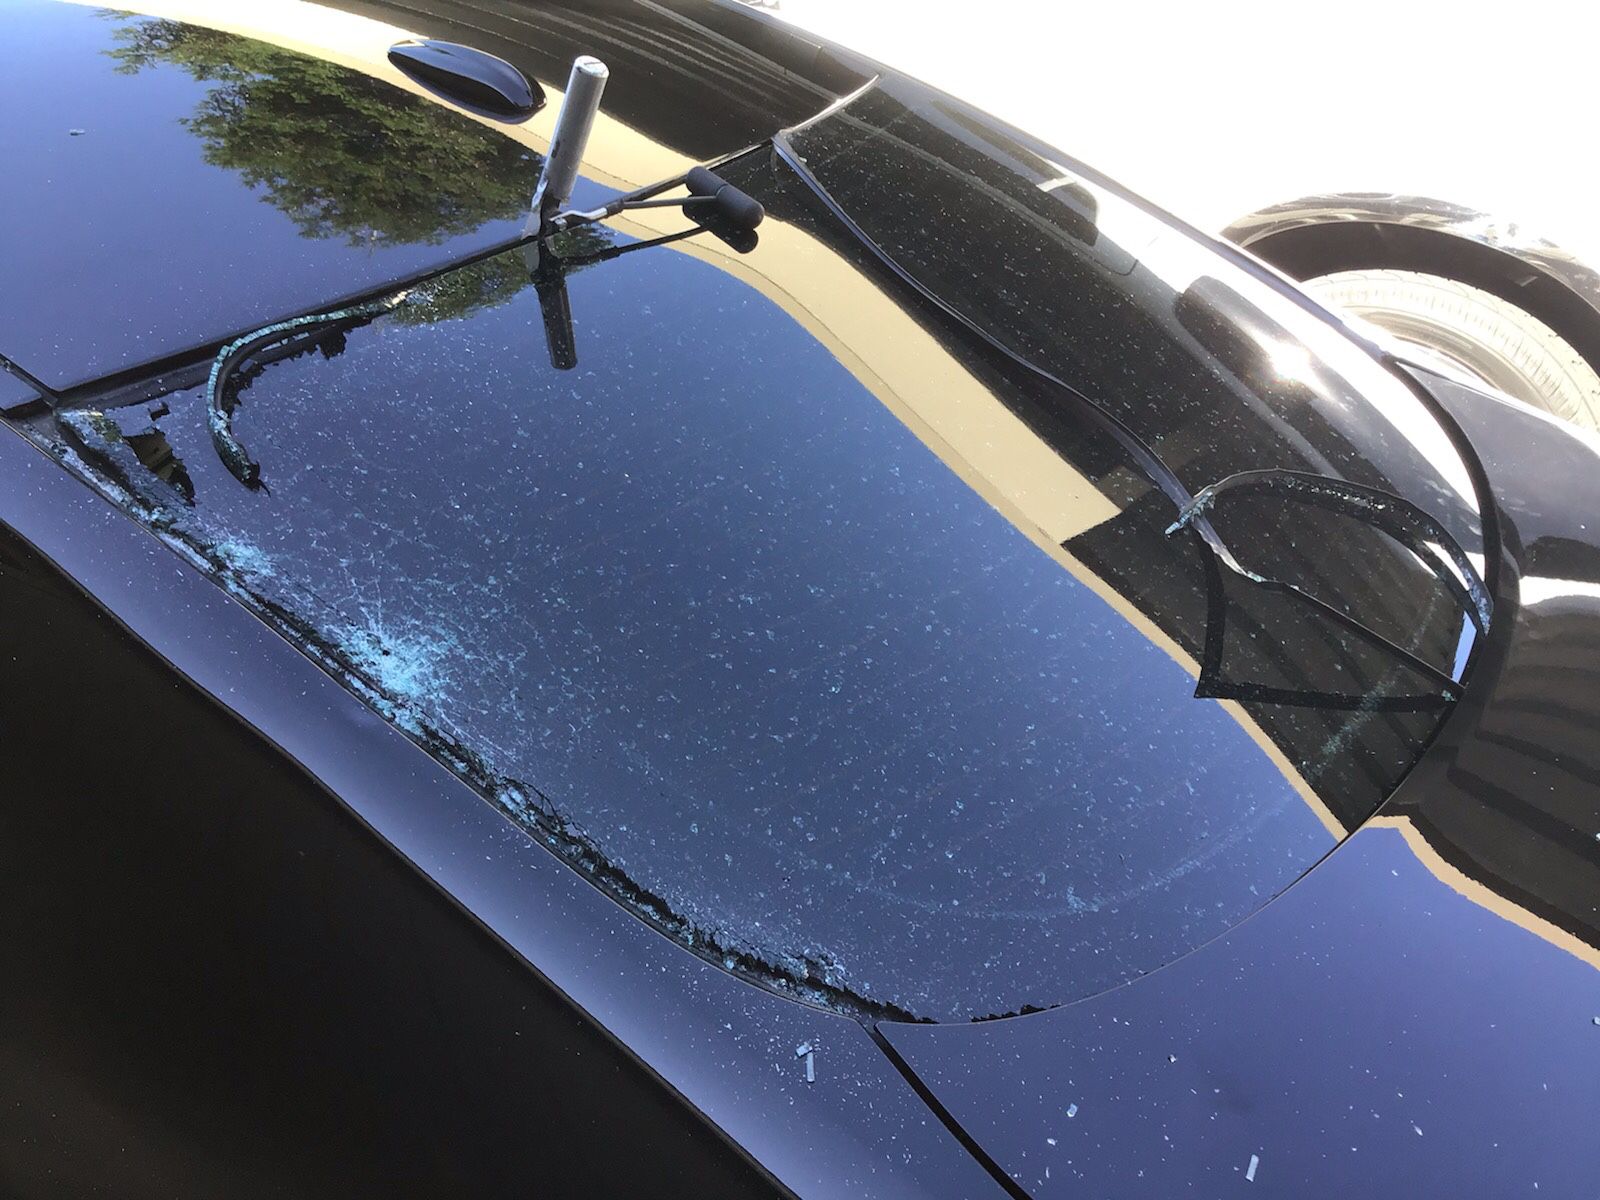 Broken glass, rock chips, windshields